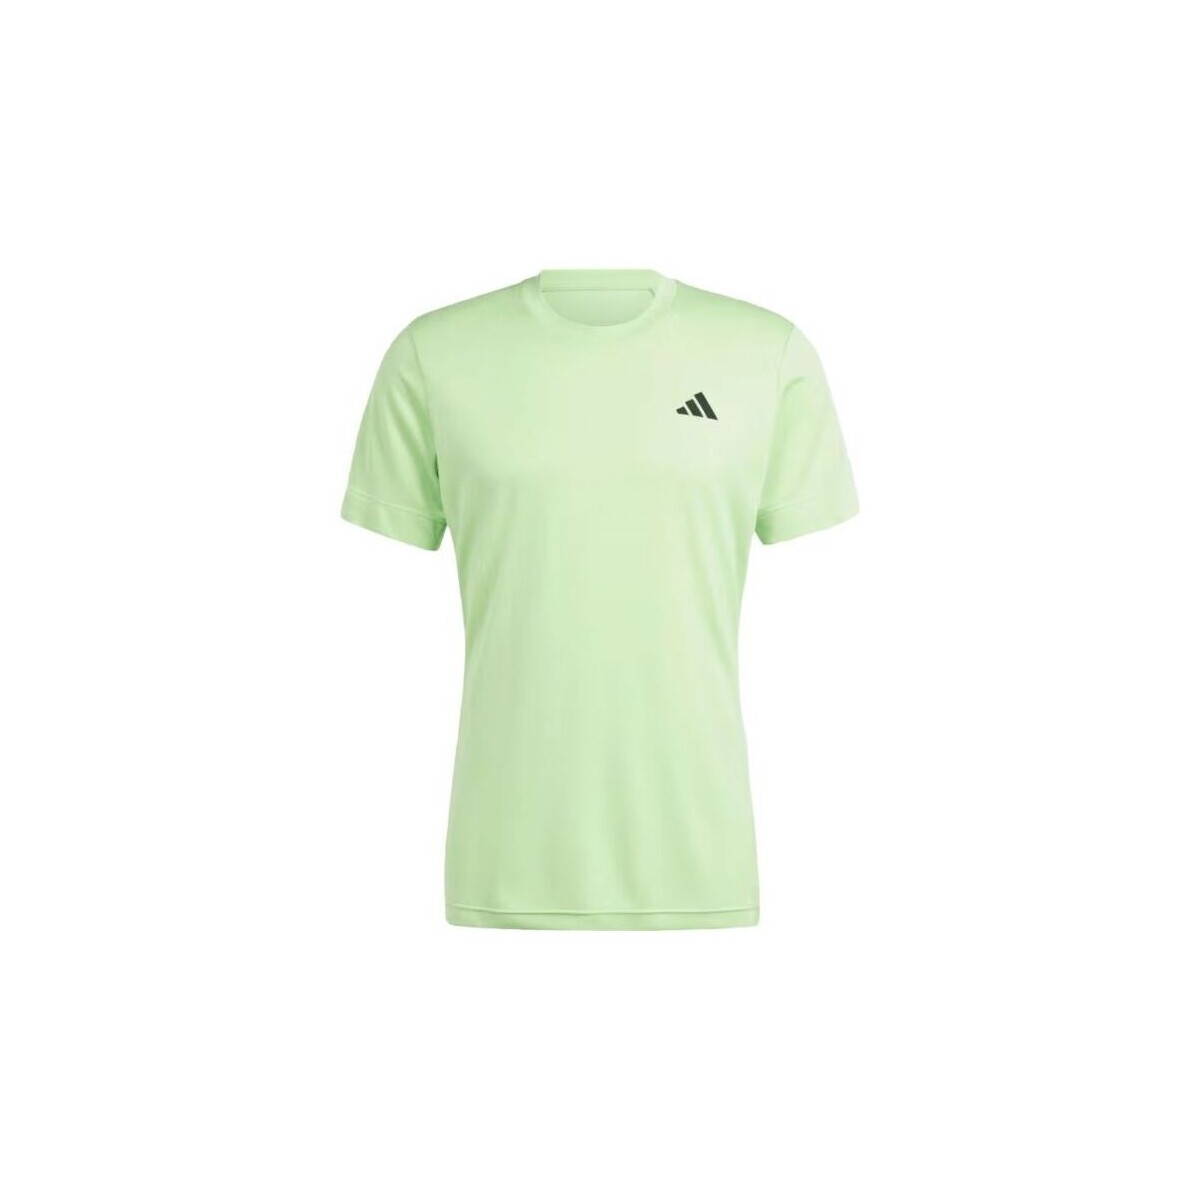 Vêtements Homme T-shirts manches courtes adidas Originals T-shirt Freelift Homme Semi Green Spark/Green Spark Jaune